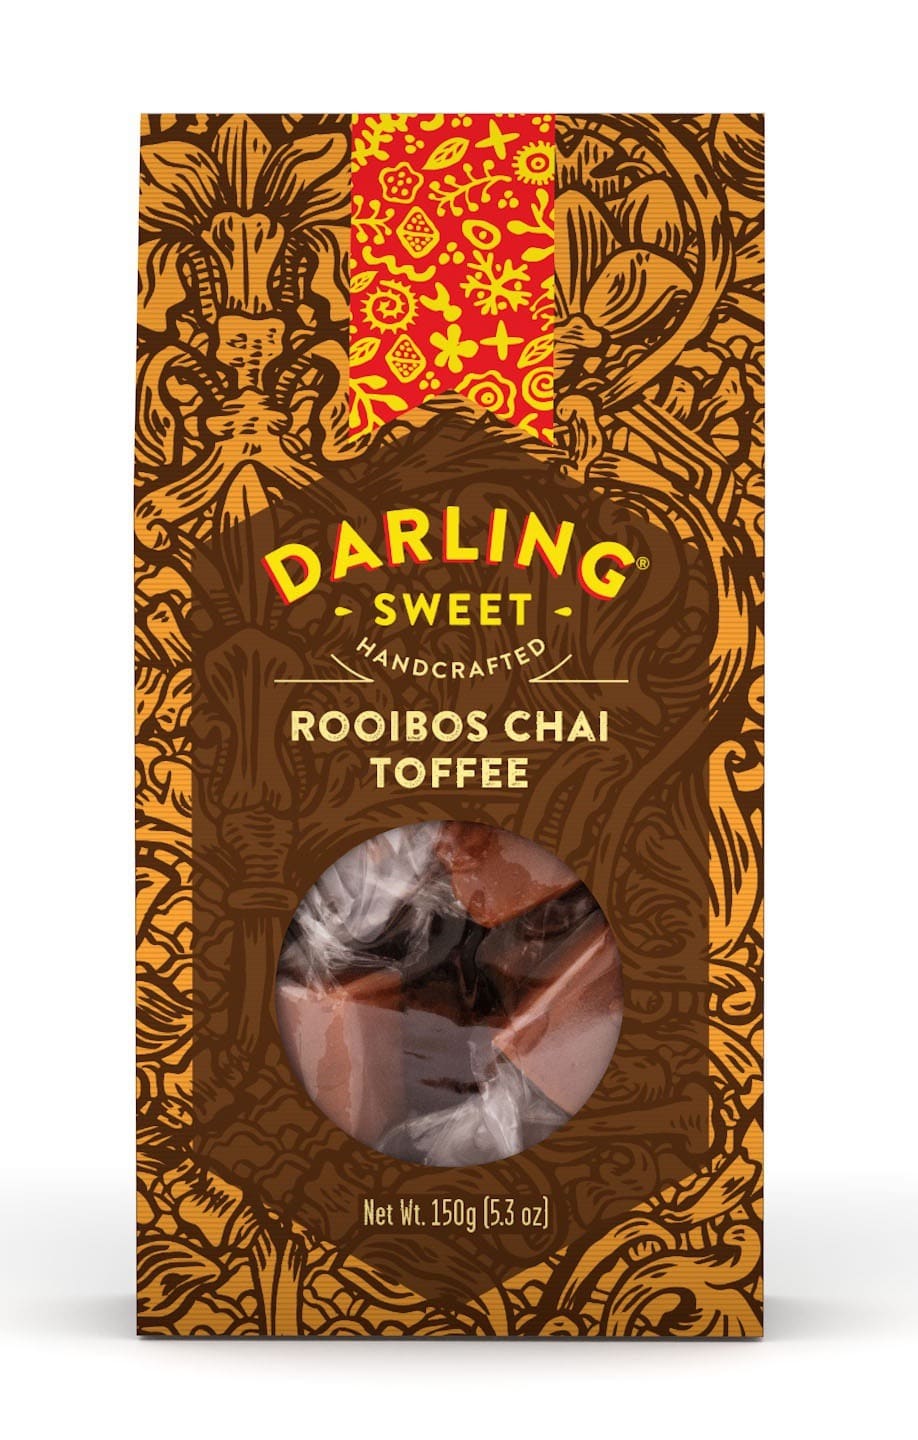 Darling Sweet Rooi Bos Chai Toffee 150g